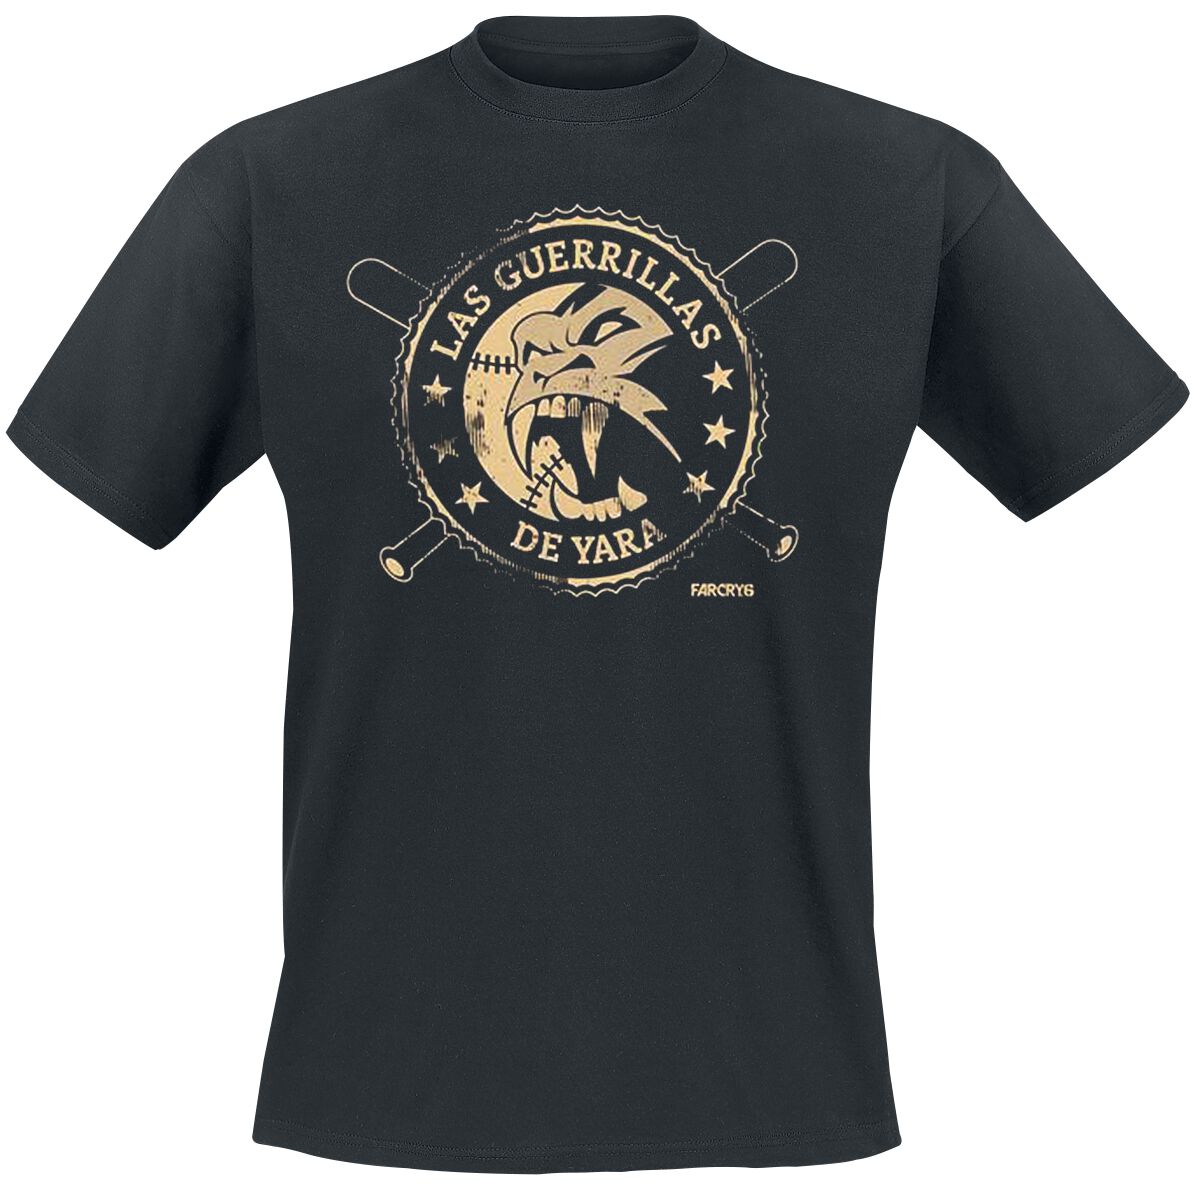 Far Cry 6 - Las Guerrillas T-Shirt black